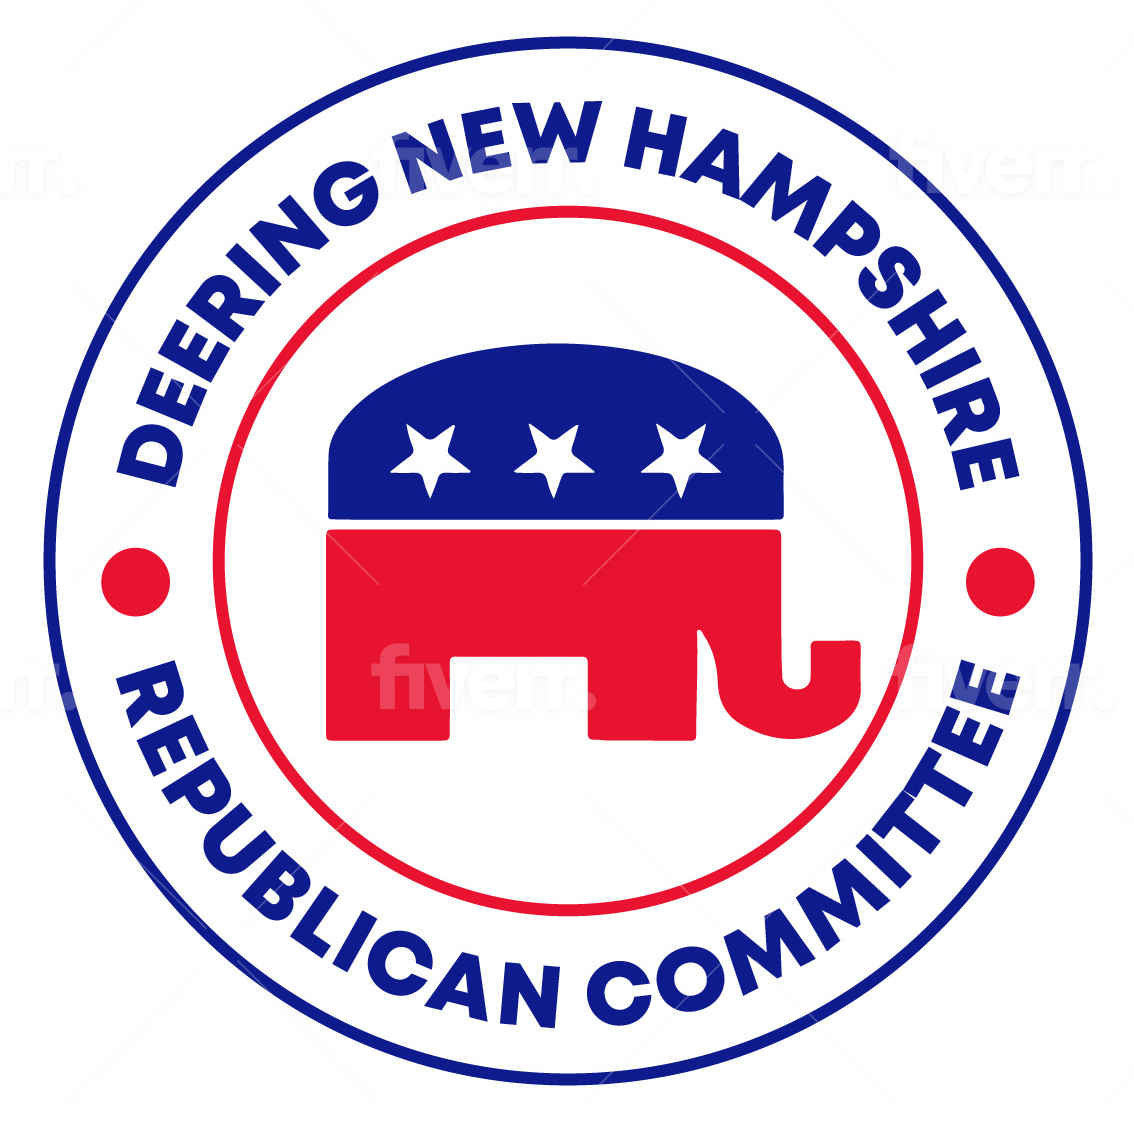 Deering Republican Committee